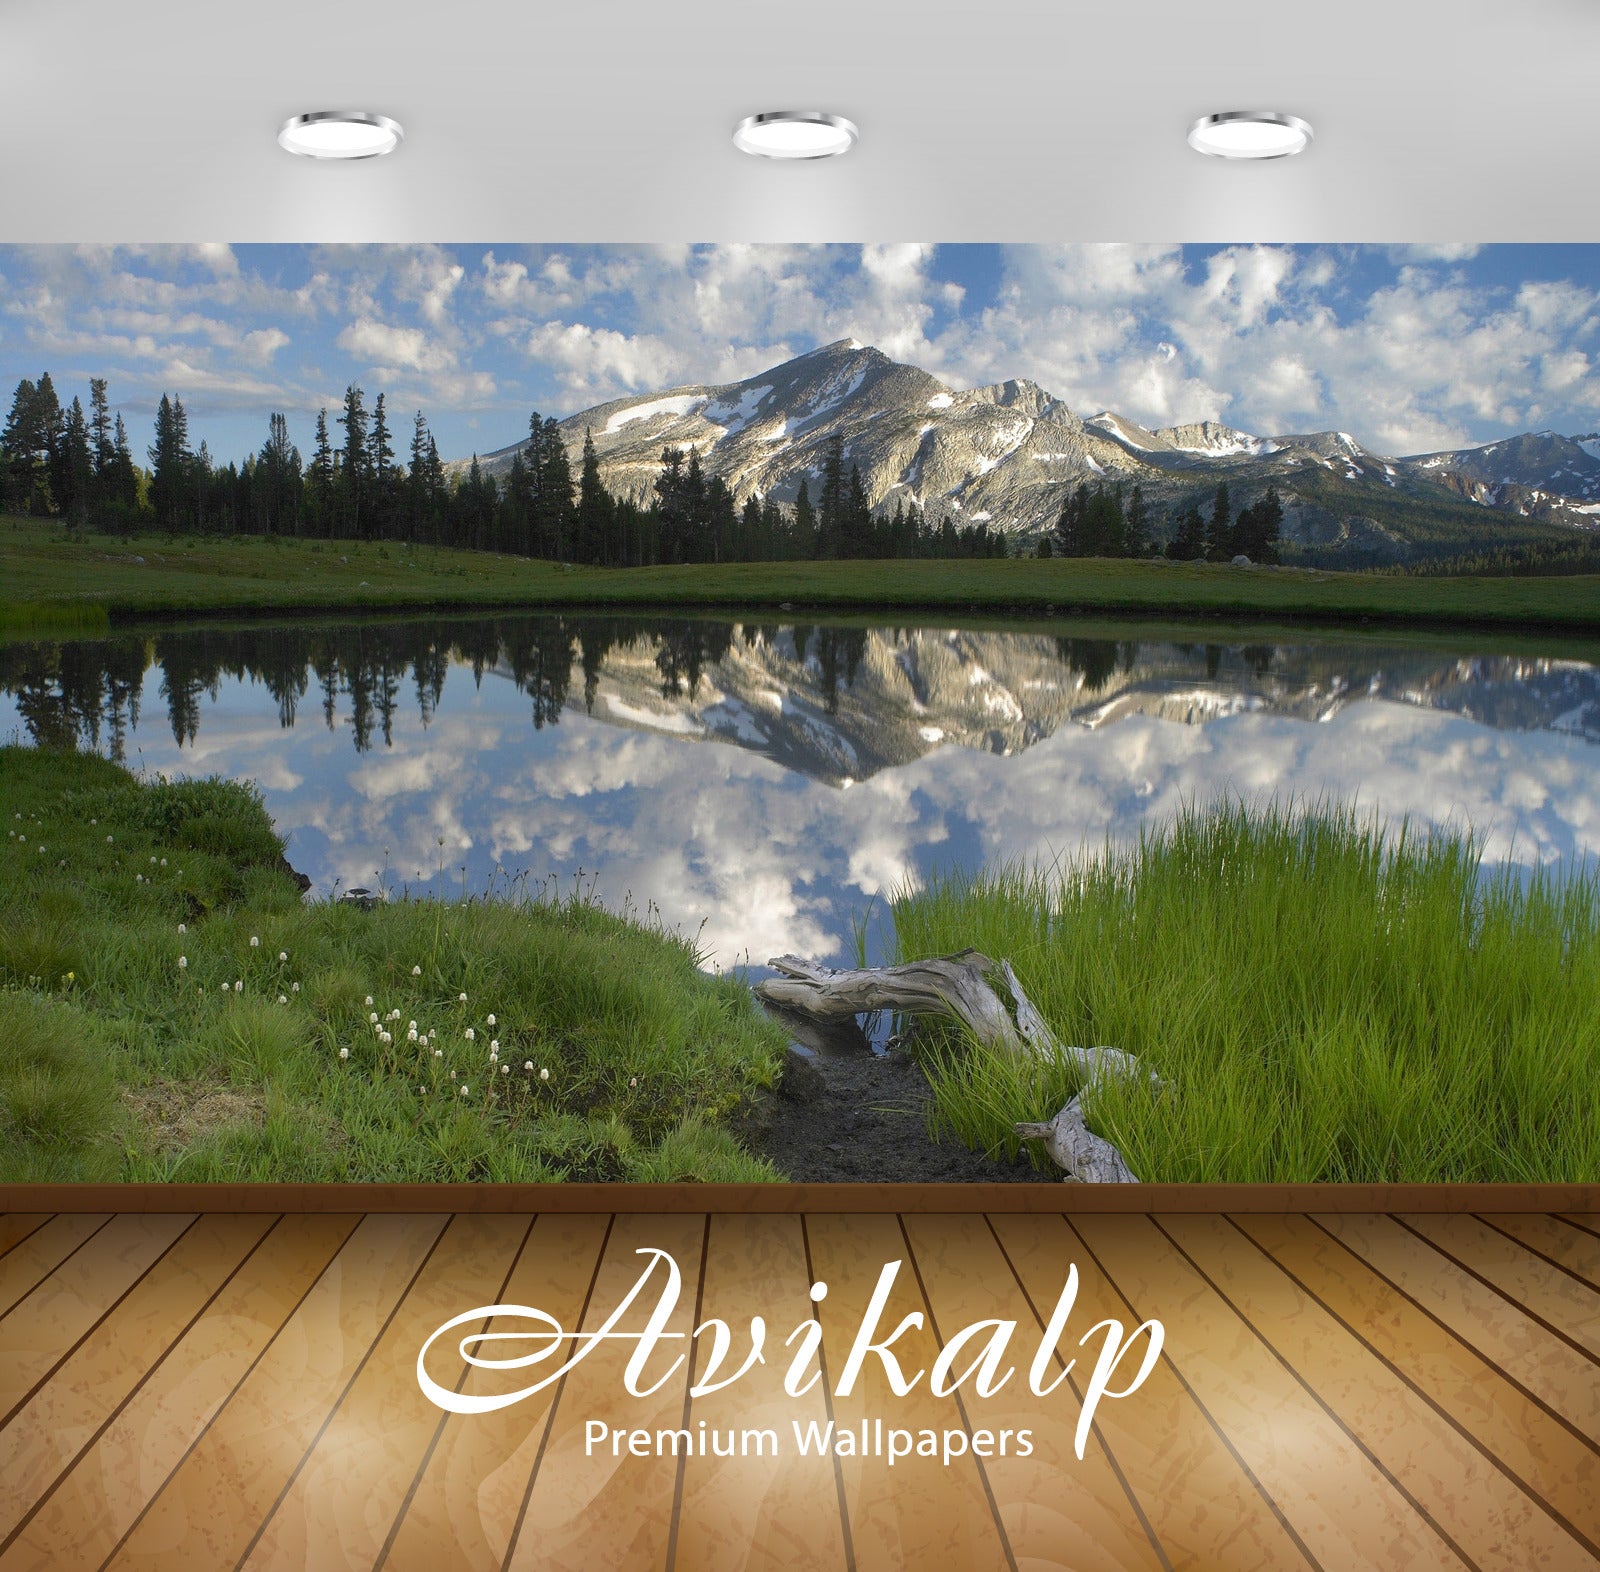 Avikalp Exclusive Awi6766 Yosemite National Park Nature Full HD Wallpapers for Living room, Hall, Ki